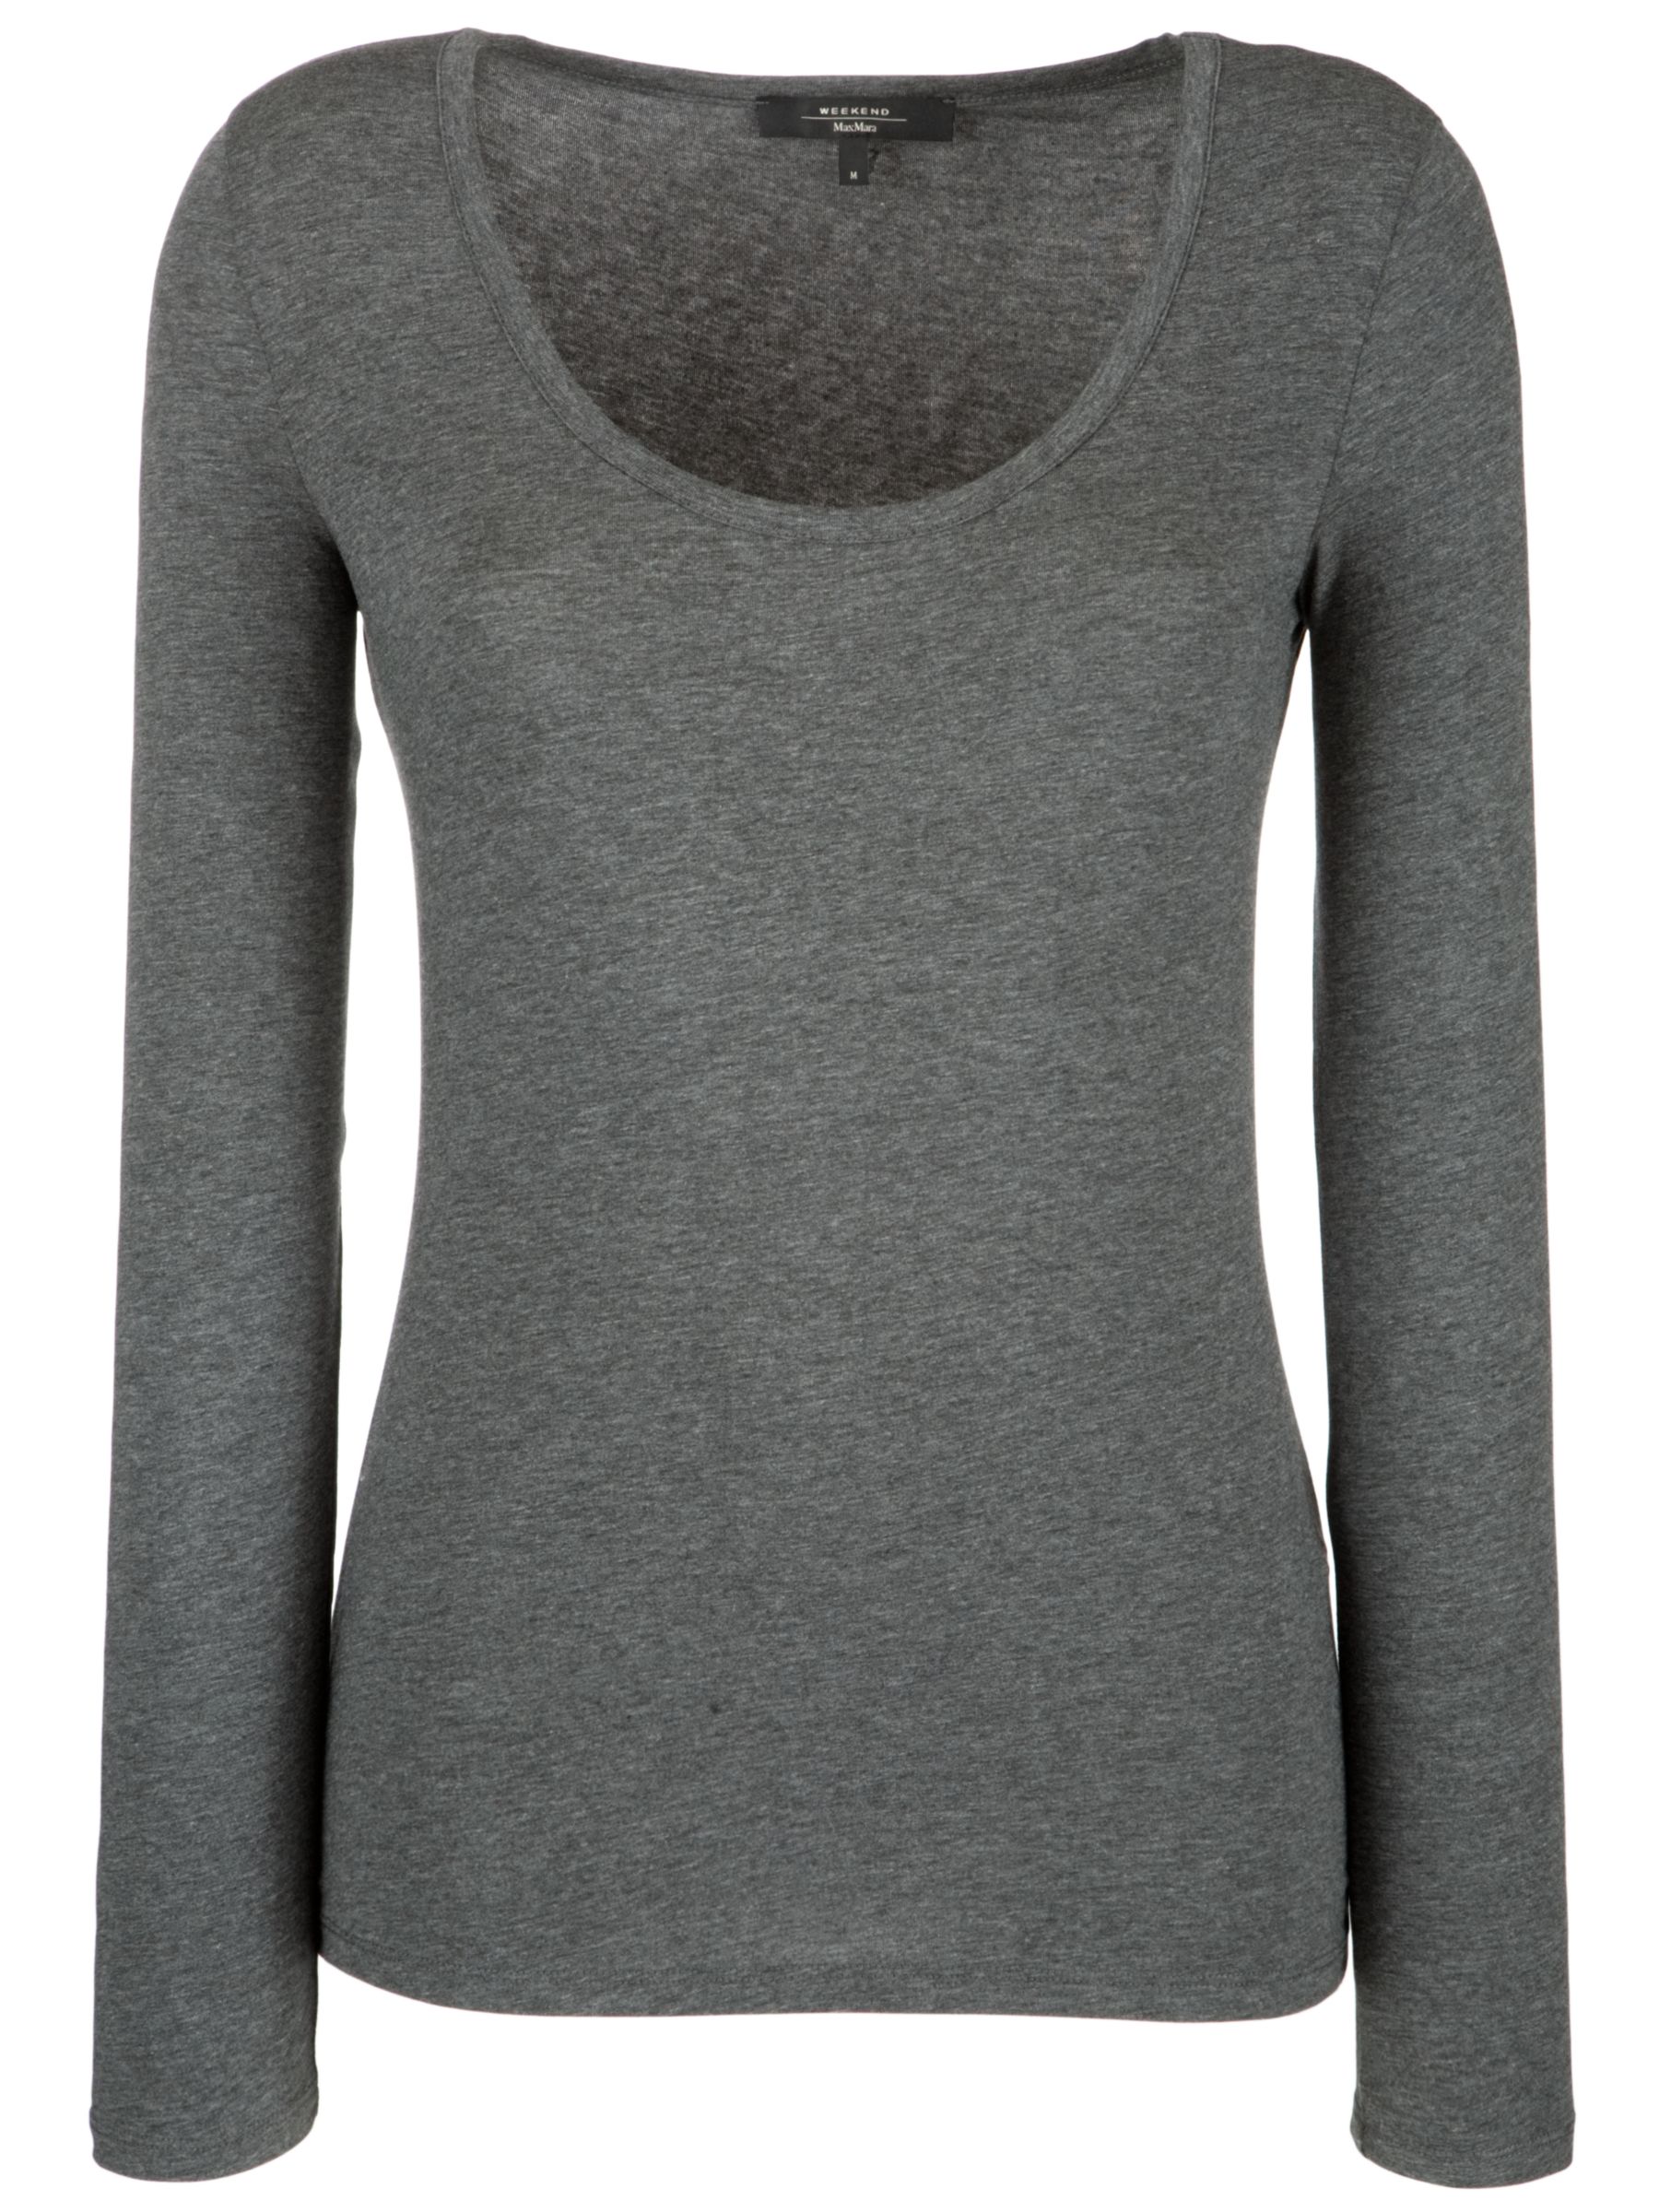 Weekend by MaxMara Long Sleeve T-Shirt, Grey